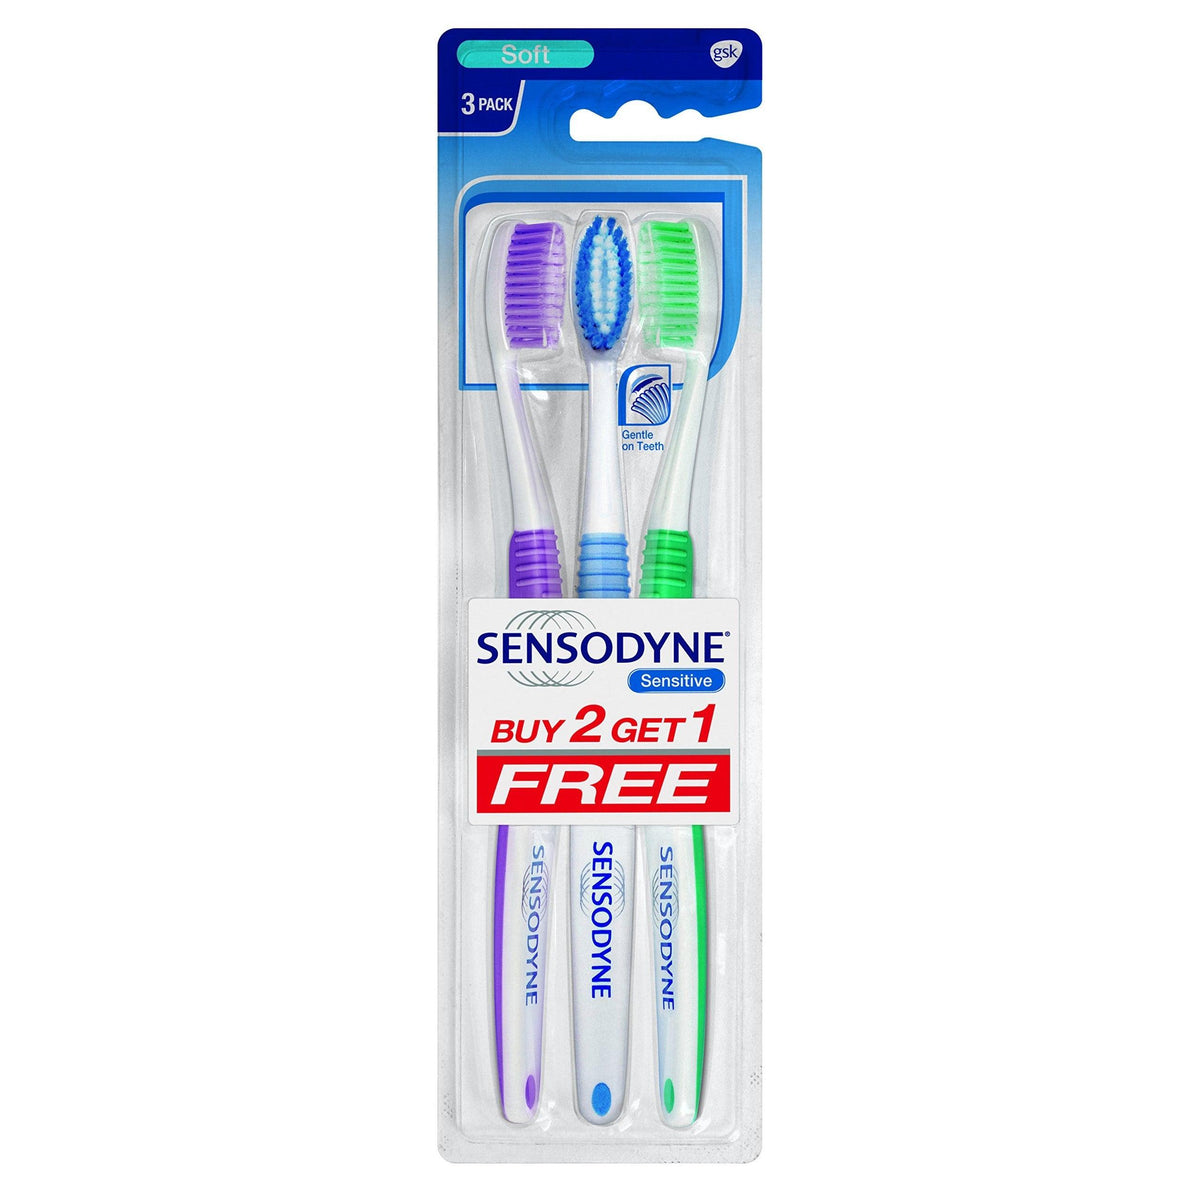 Sensodyne Sensitive Toothbrush (2+1 Pack) -  Manual Toothbrushes in Sri Lanka from Arcade Online Shopping - Just Rs. 1590!